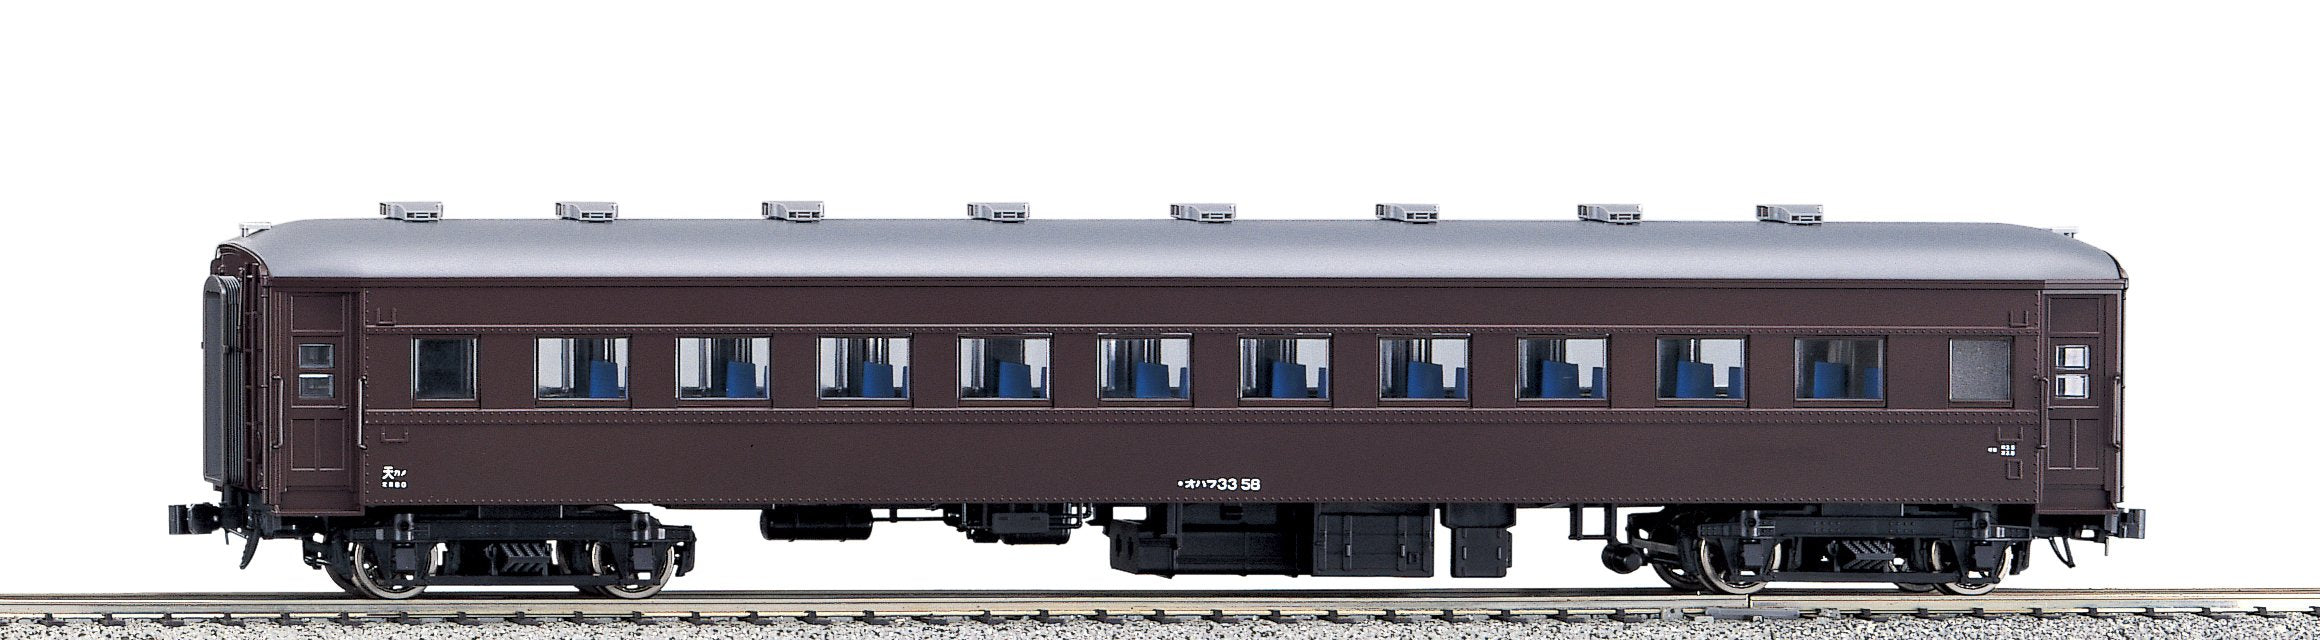 Kato Ho Gauge 1-514 Brown Model Passenger Railway Car - Ohafu 33